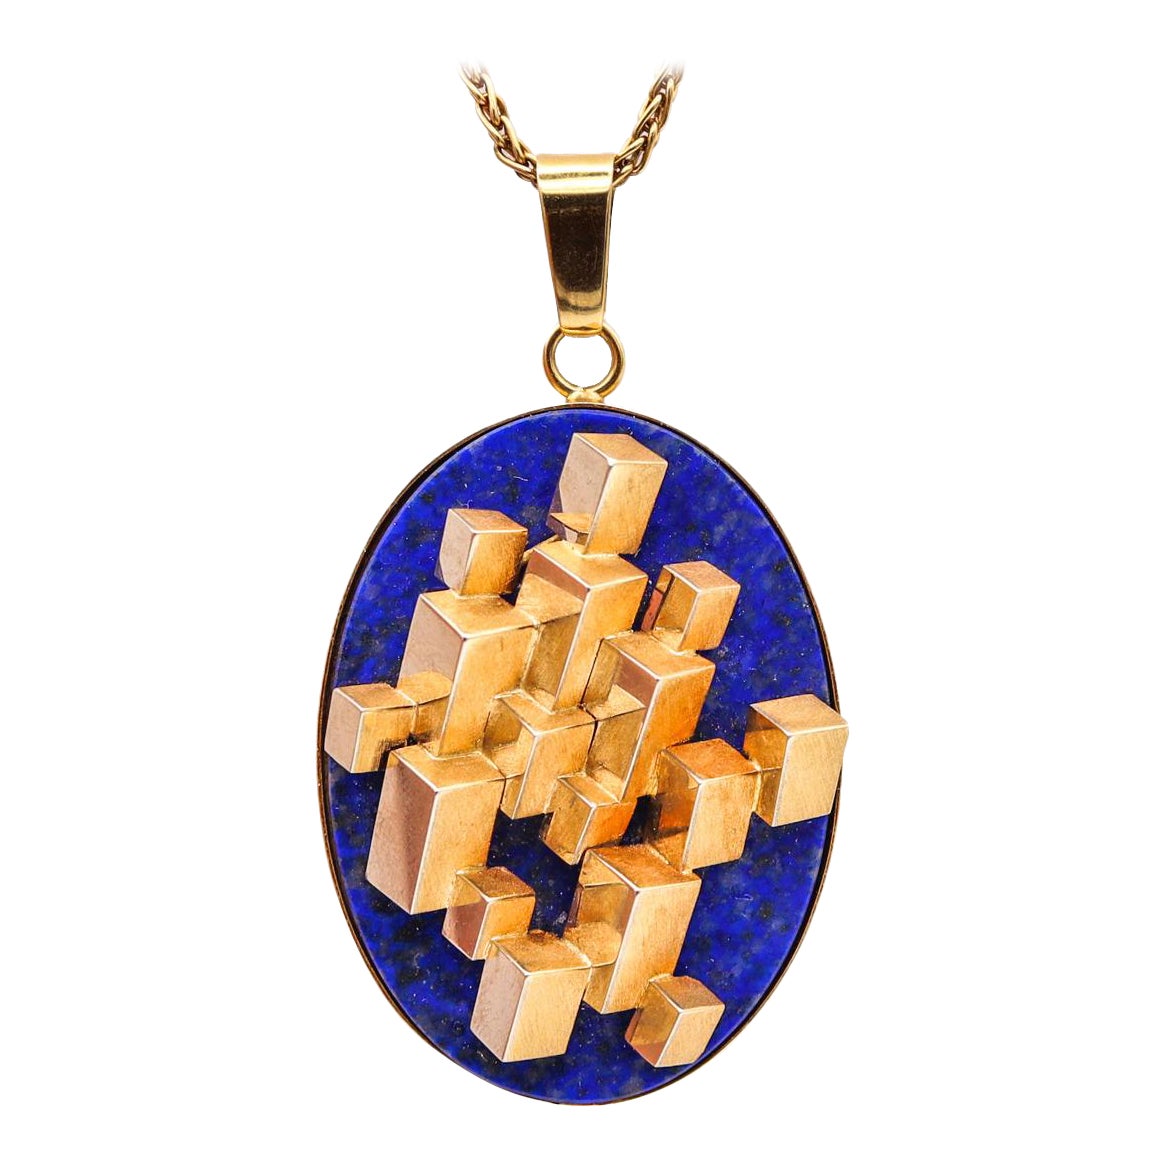 Livio Bevilacqua 1967 Op Art Geometric Pendant Necklace in 18Kt Gold and Lapis For Sale